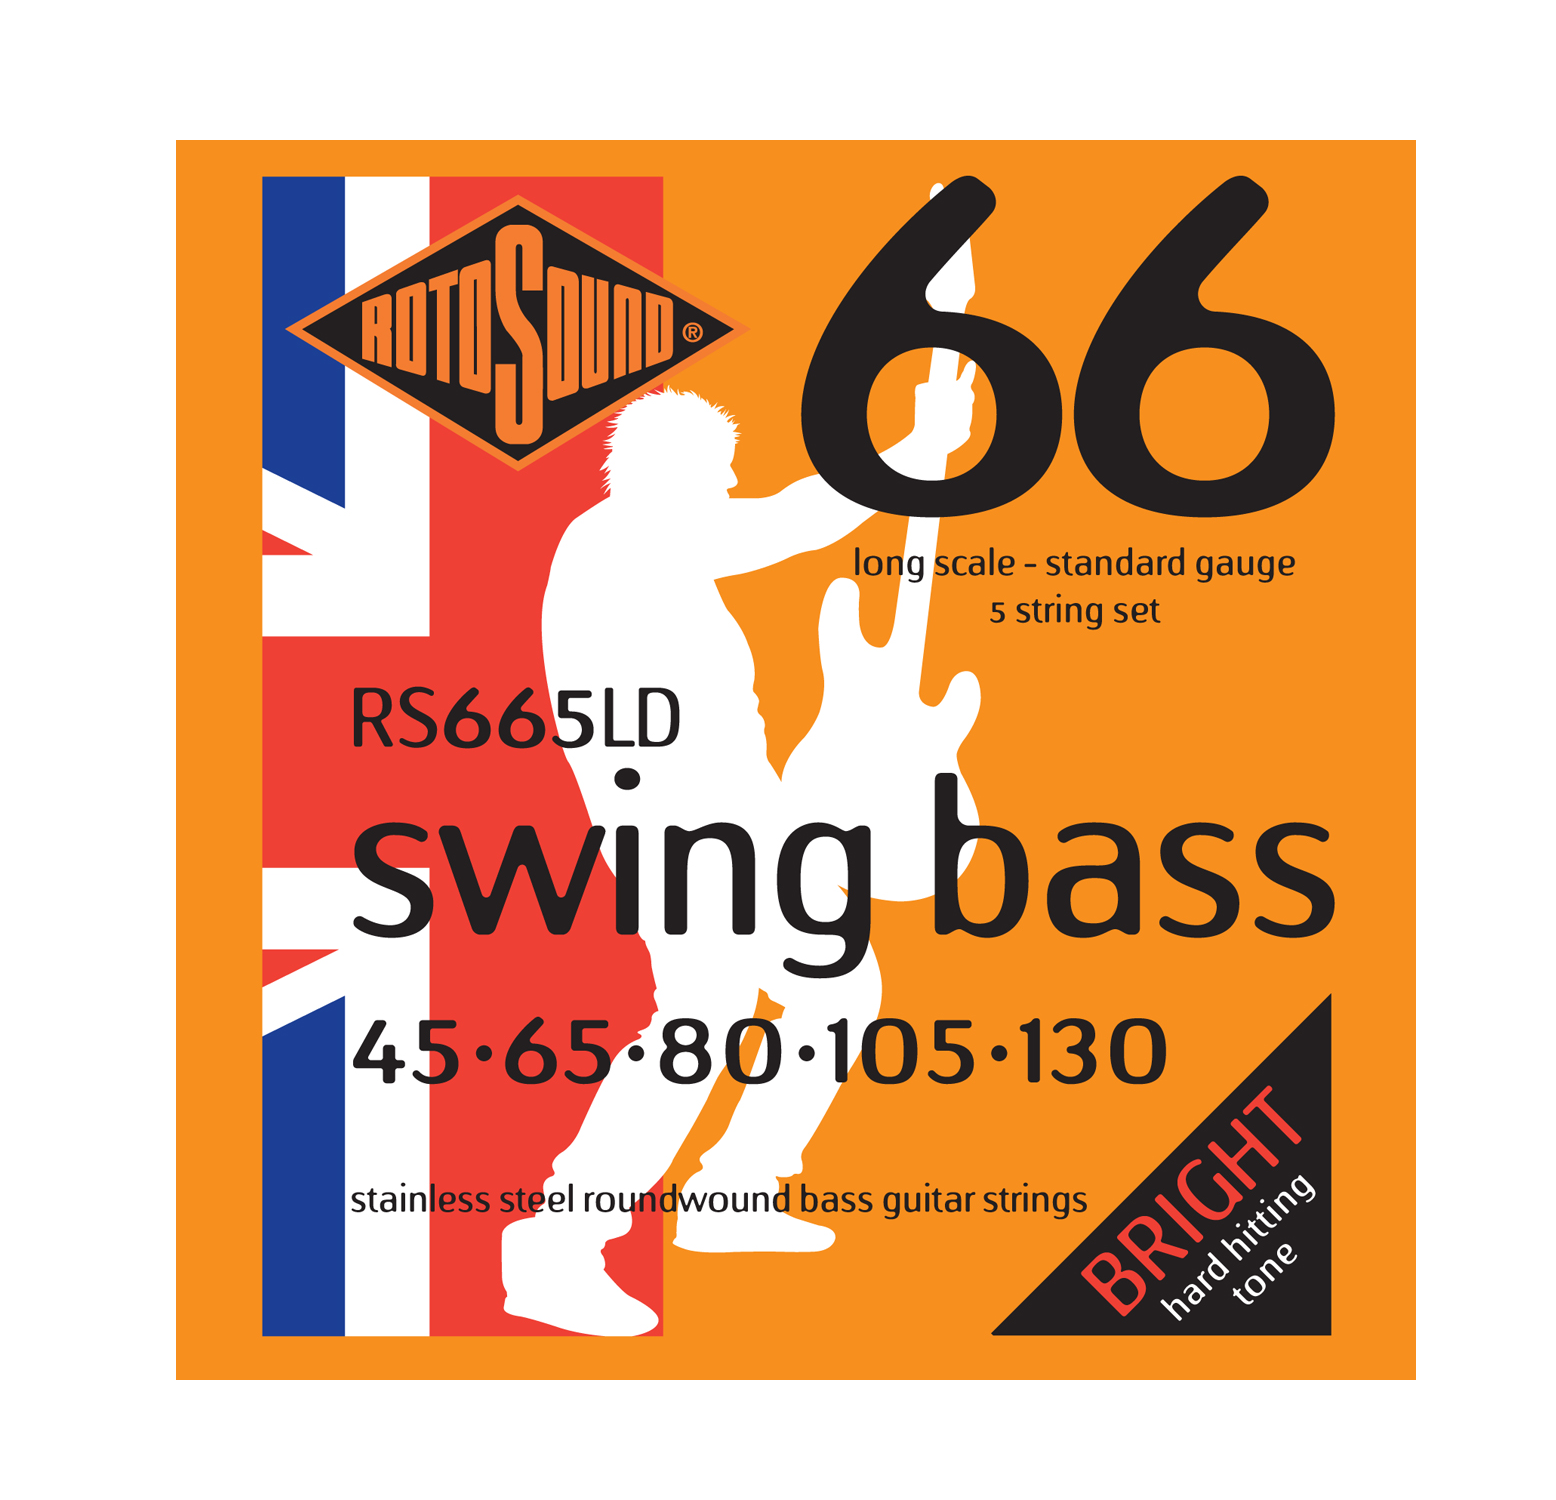 ROTOSOUND RS665LD BASS STRINGS STAINLESS STEEL струны для 5-струнной басгитары, сталь, 45-